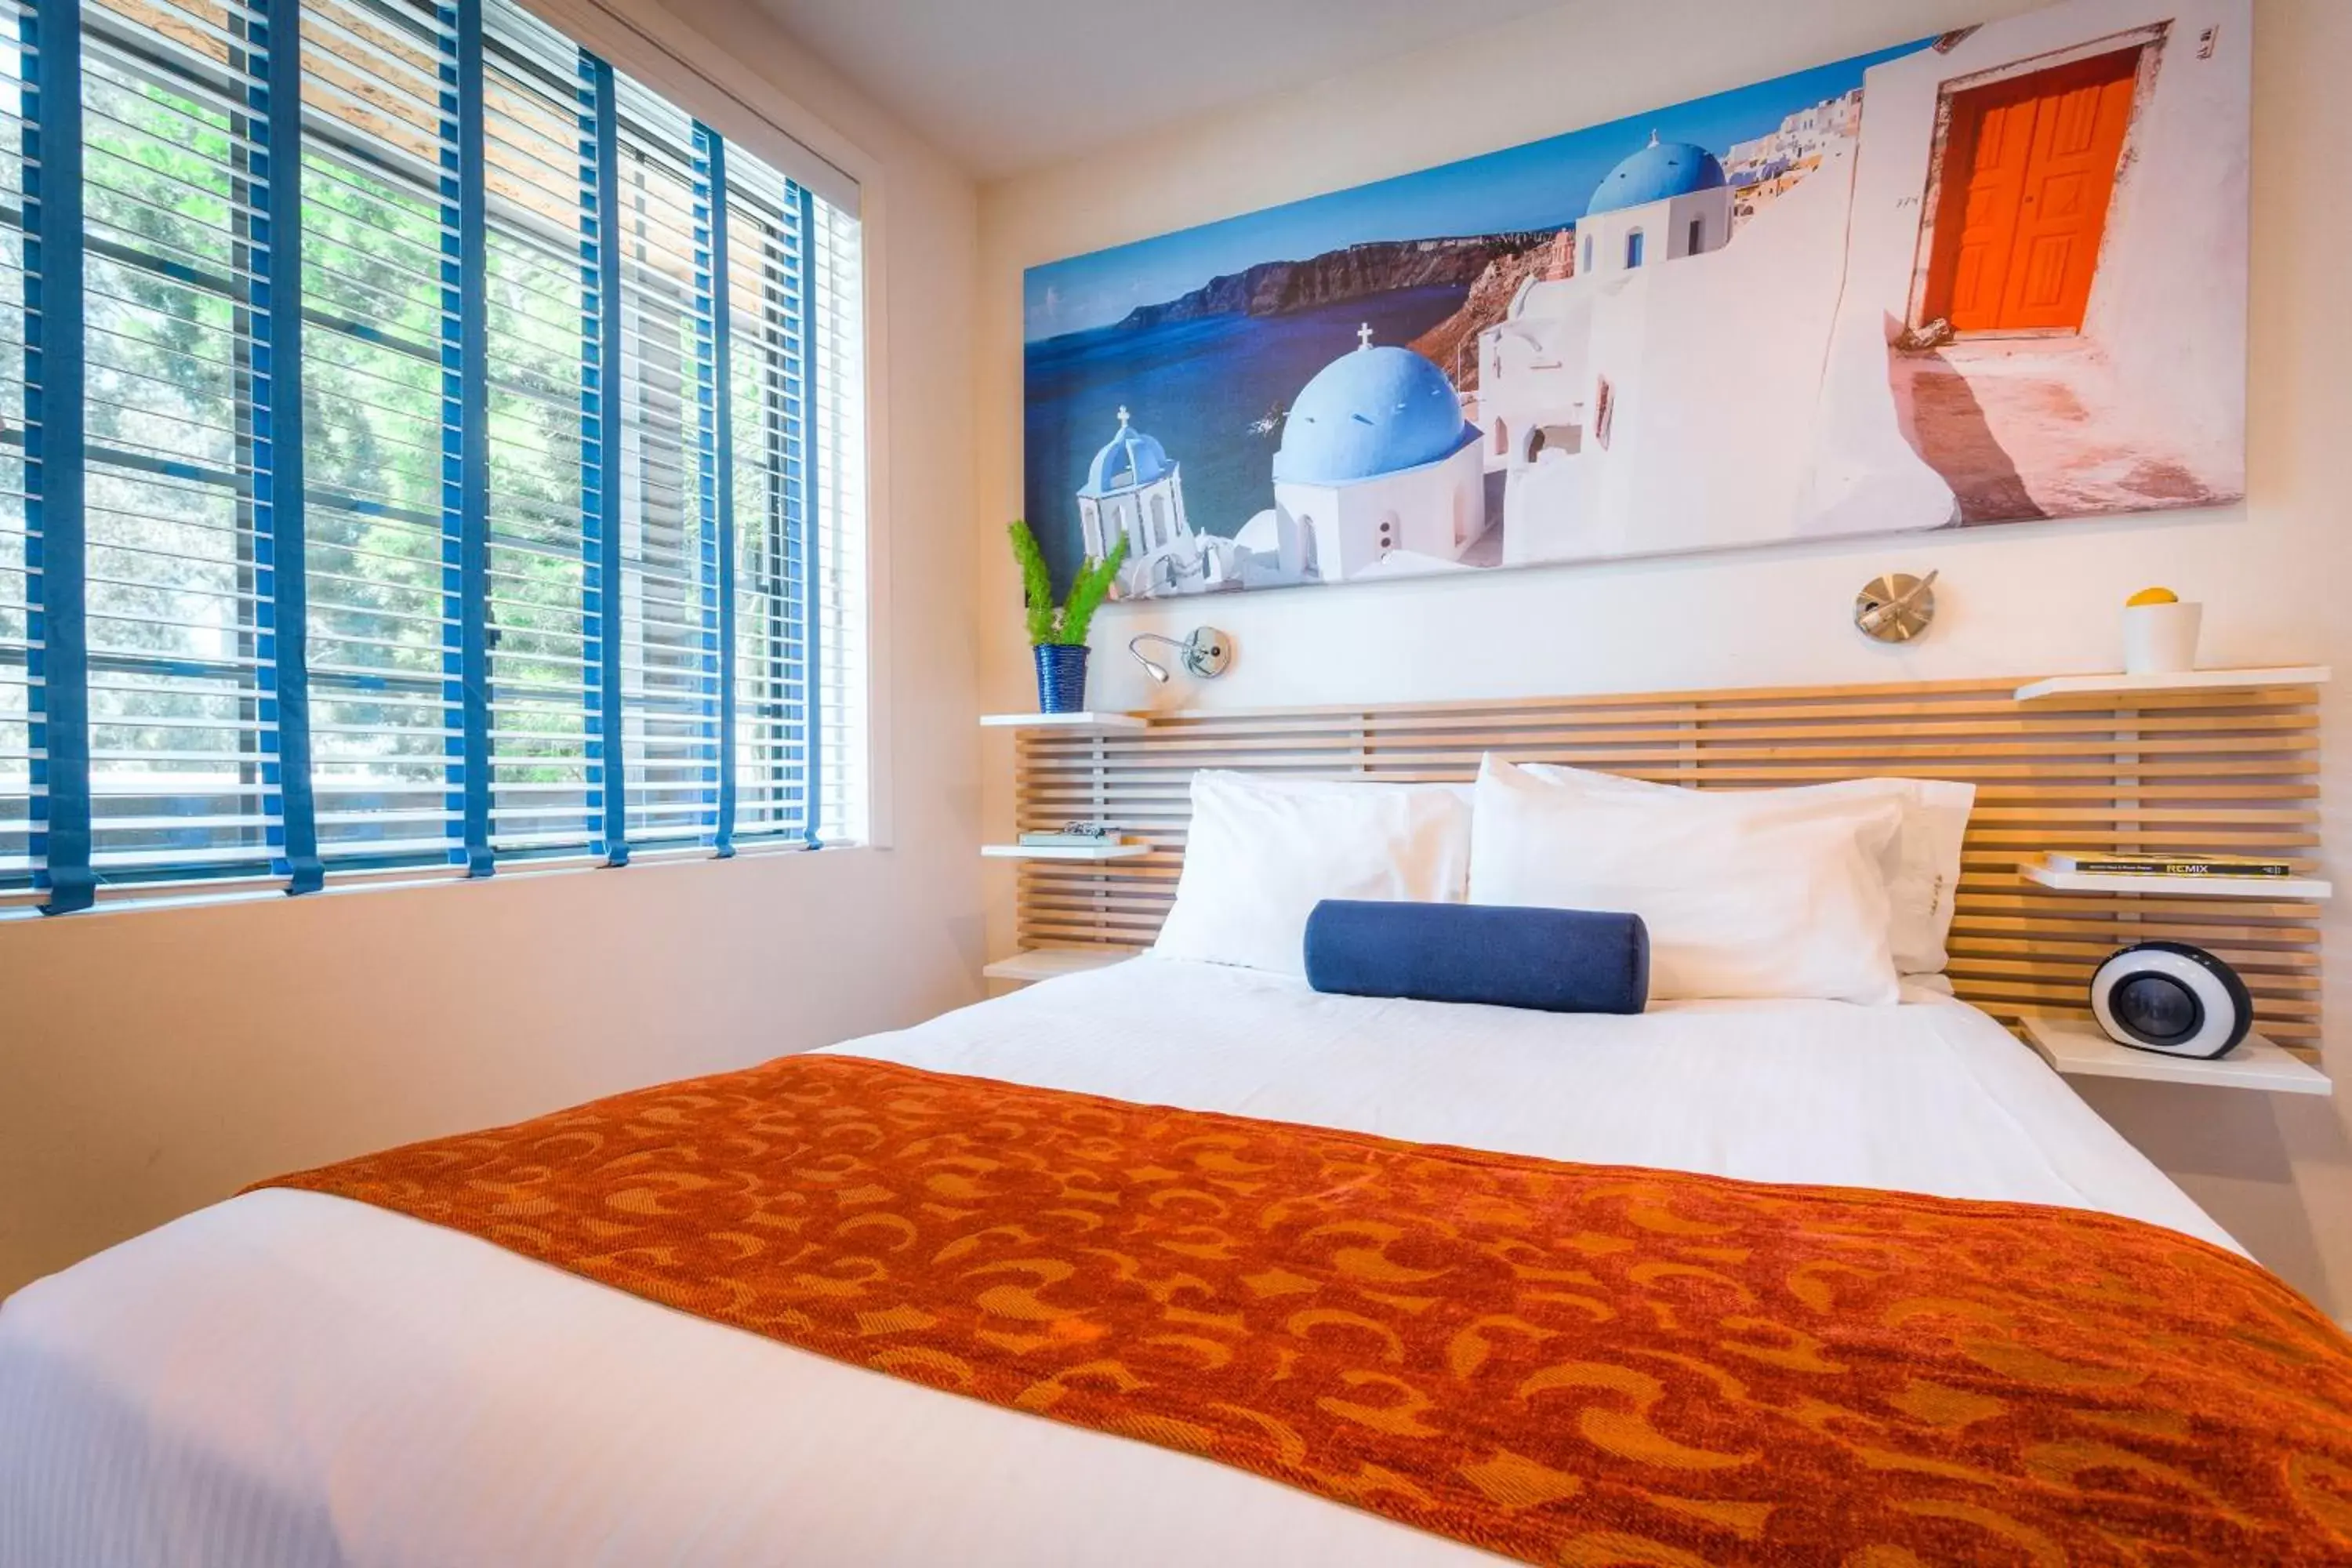 Bed, Room Photo in Hotel Zico